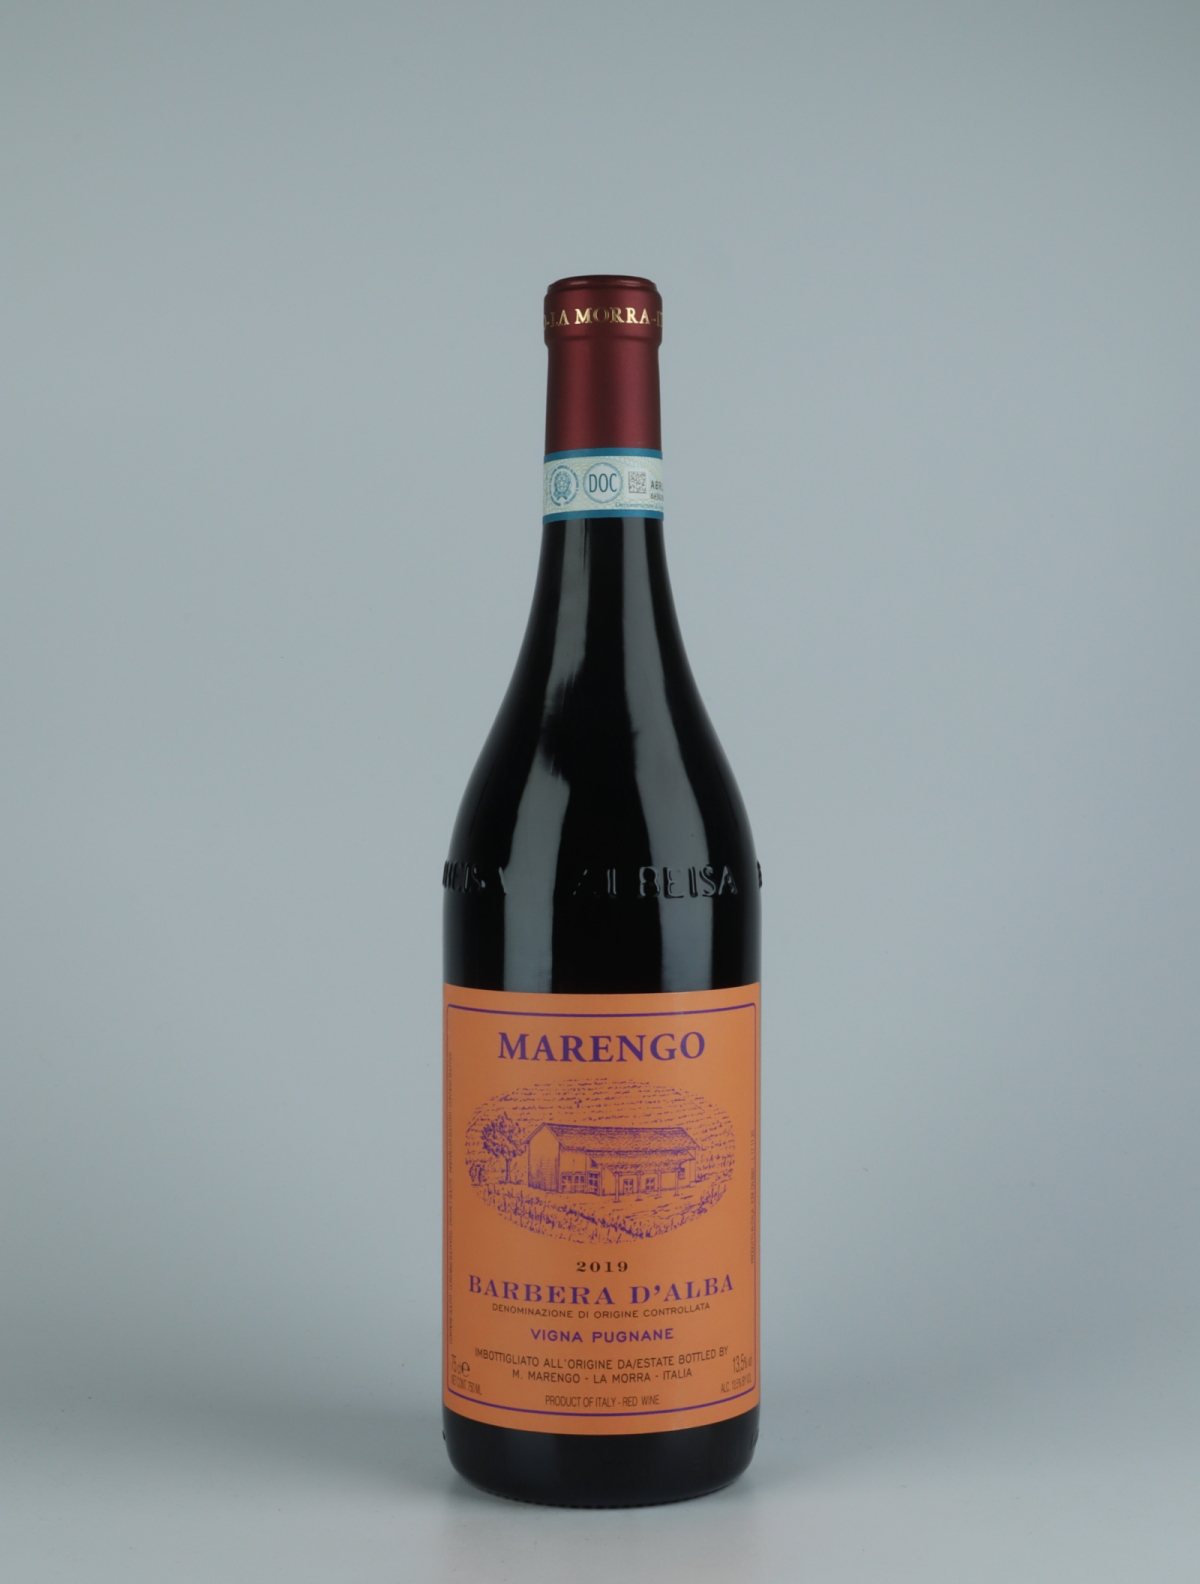 A bottle 2019 Barbera d'Alba - Pugnane Red wine from Mario Marengo, Piedmont in Italy